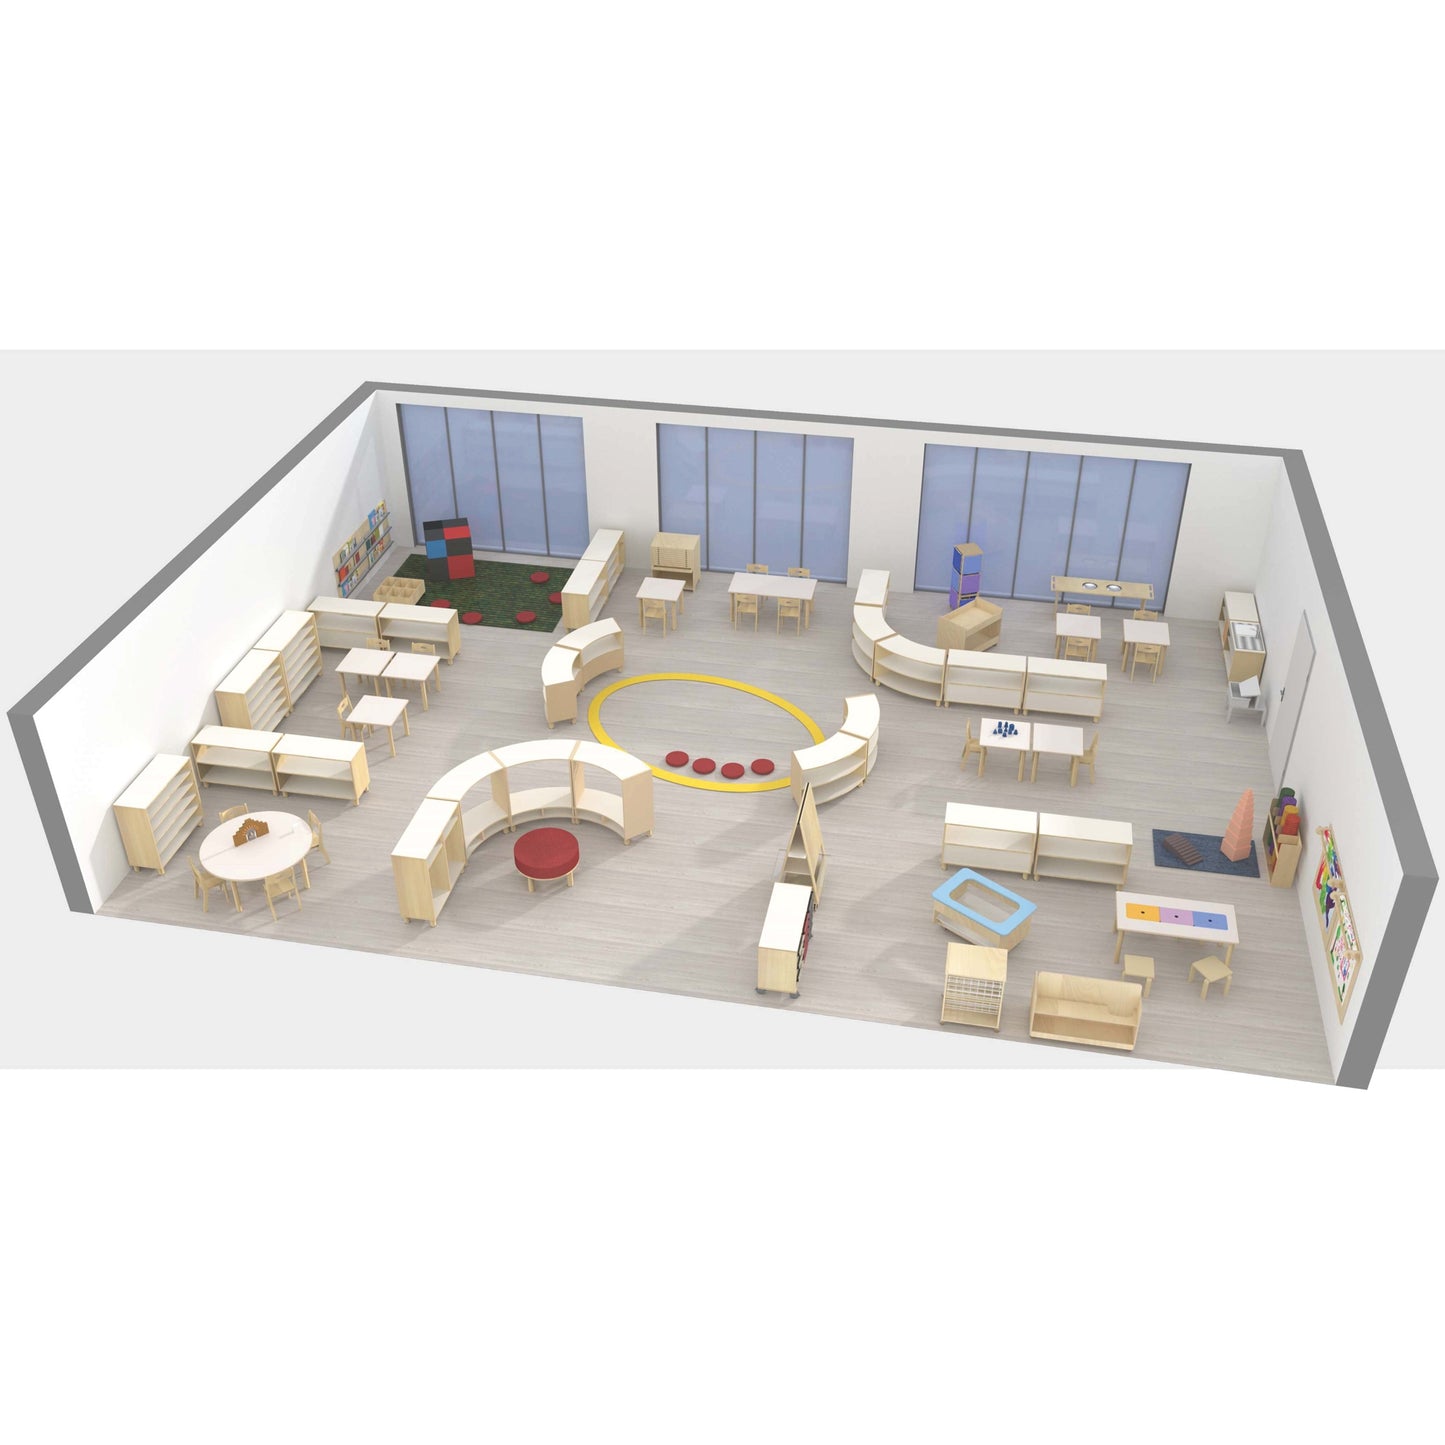 Practical Life Area Furniture Set (NL)